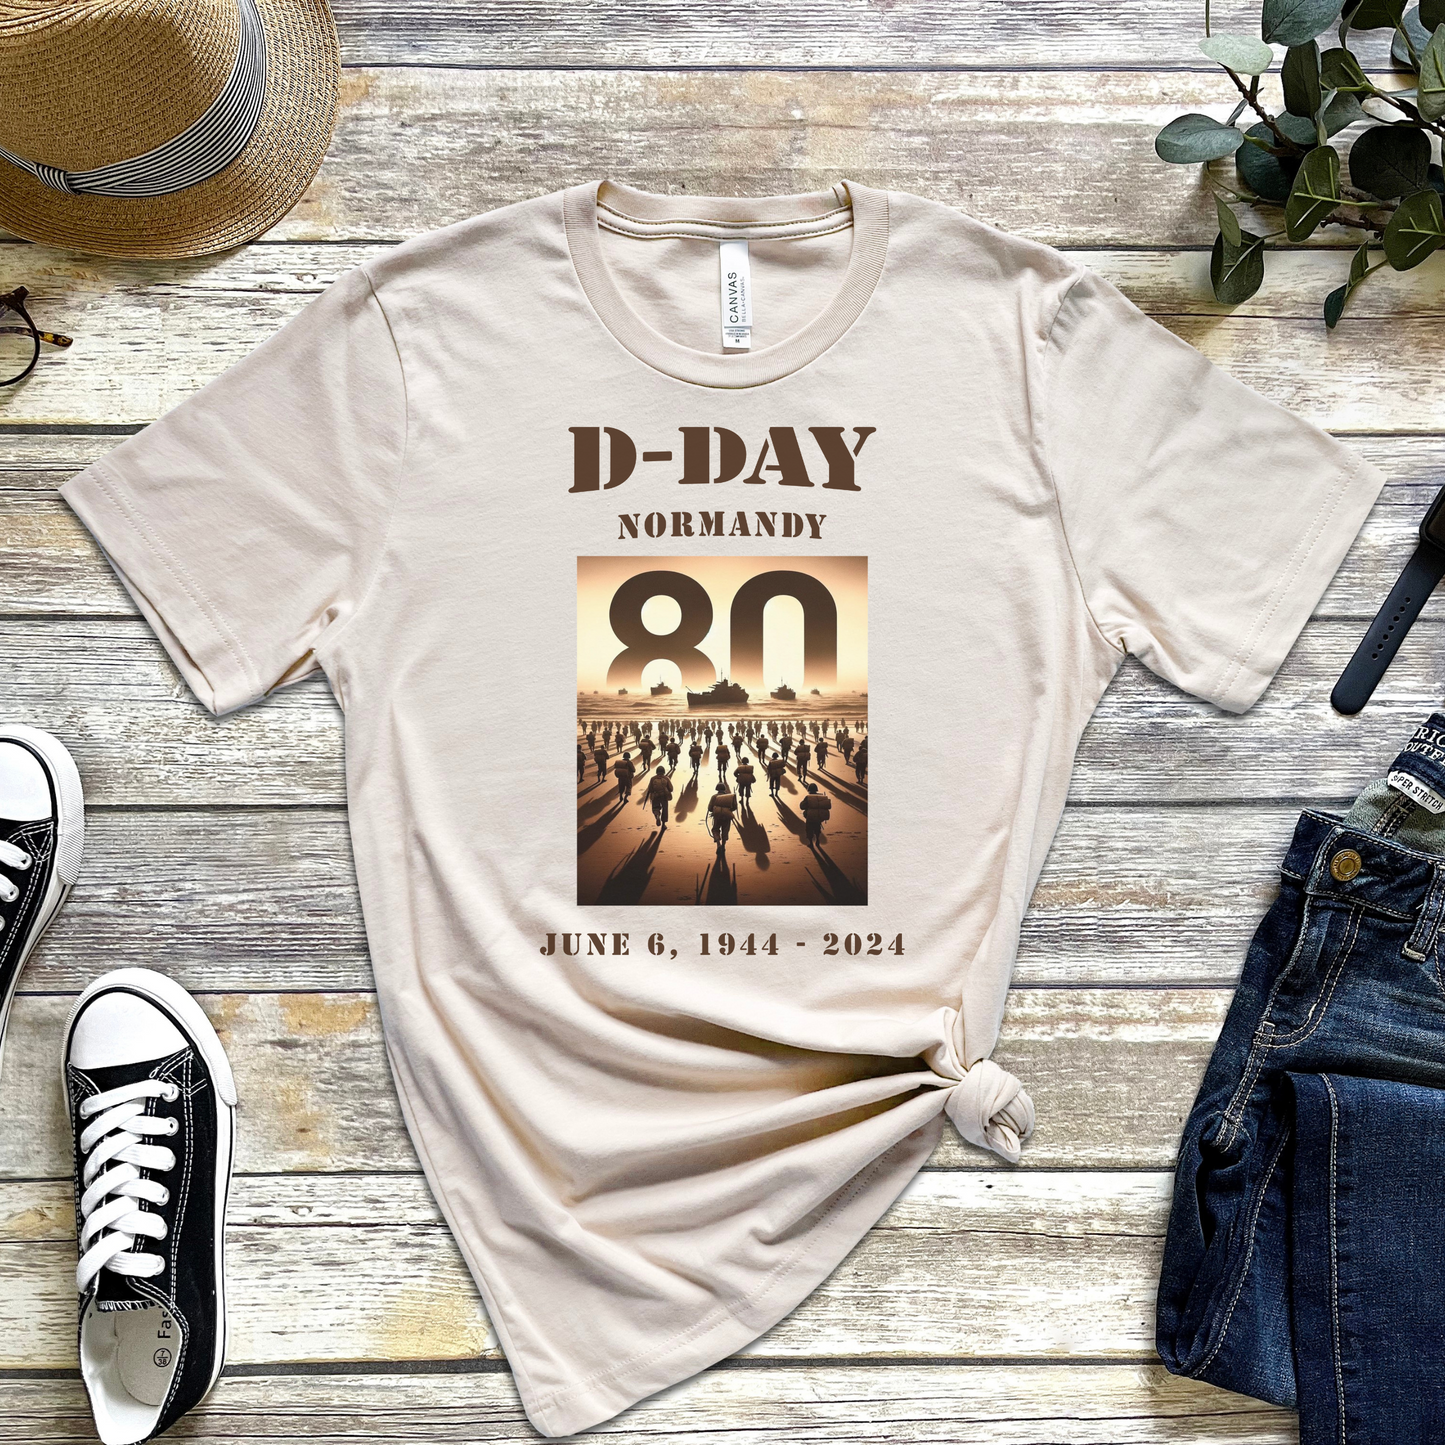 D-Day Normandy 80th Anniversary T-Shirt - Military History Tee - Mardonyx T-Shirt XS / Natural